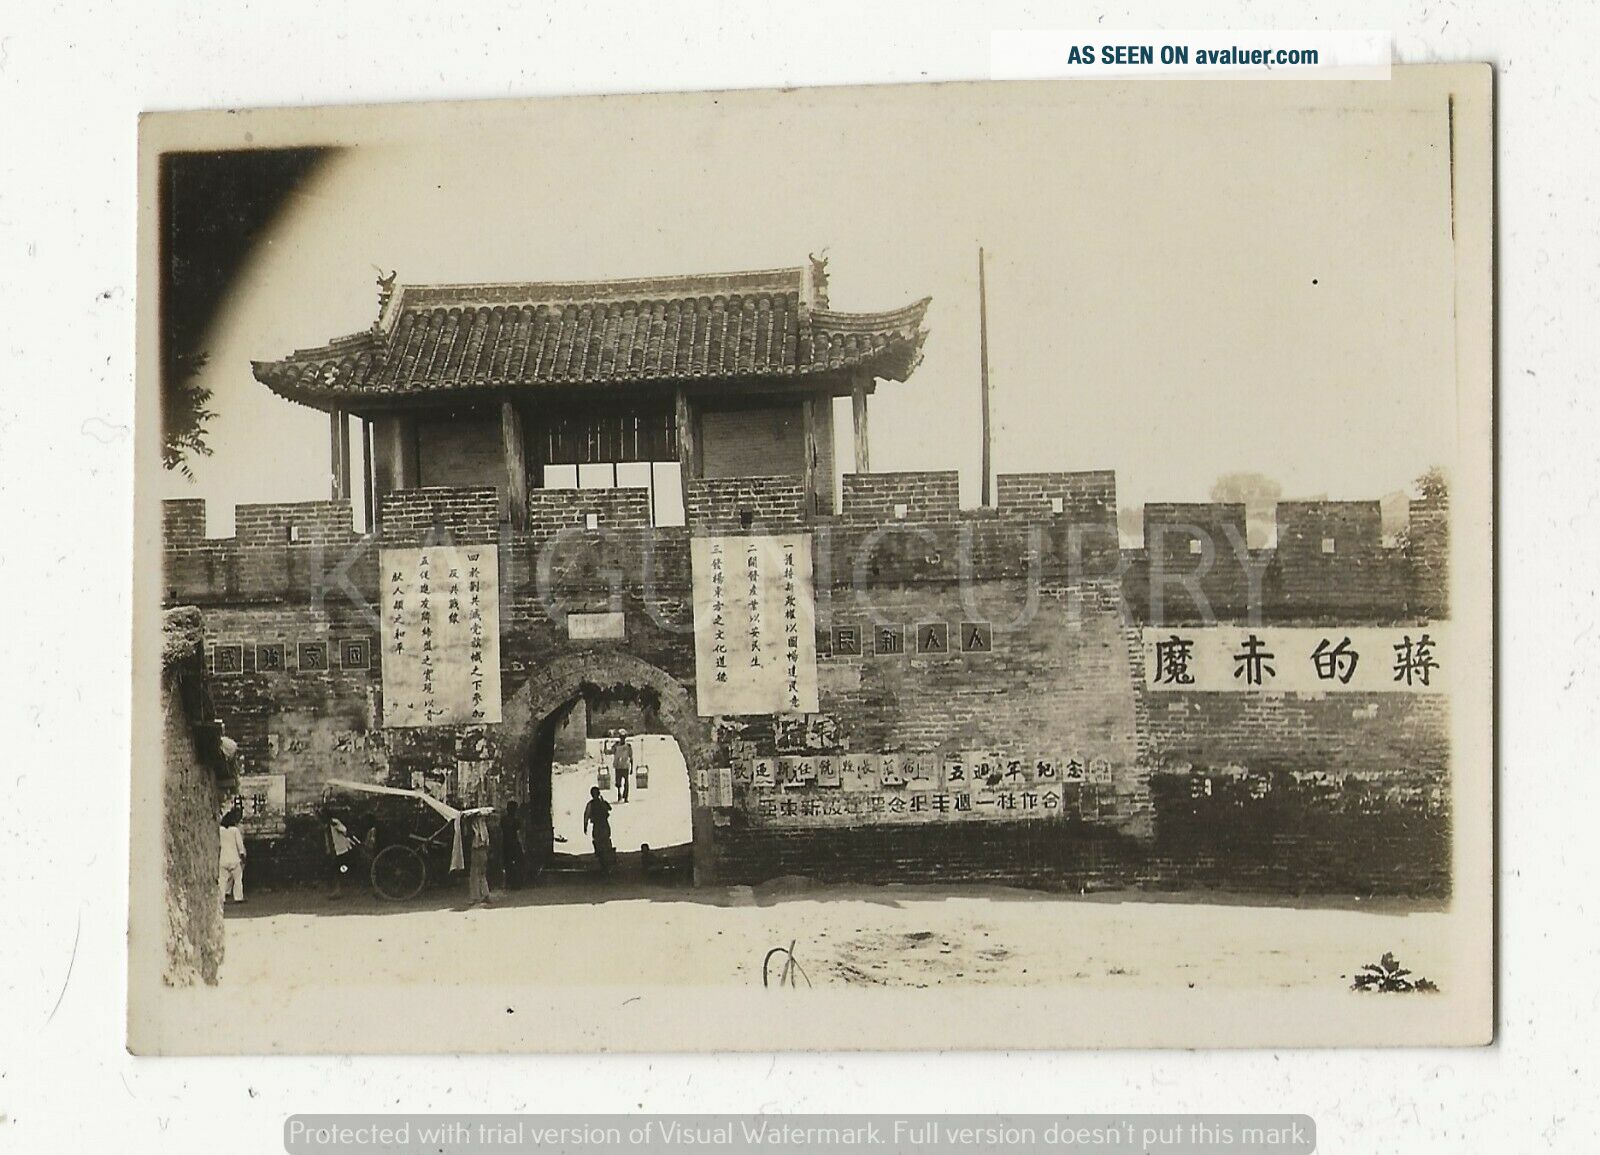 WWII JAPANESE PHOTO: OLD CHINESE CITY WITH PROPAGANDA